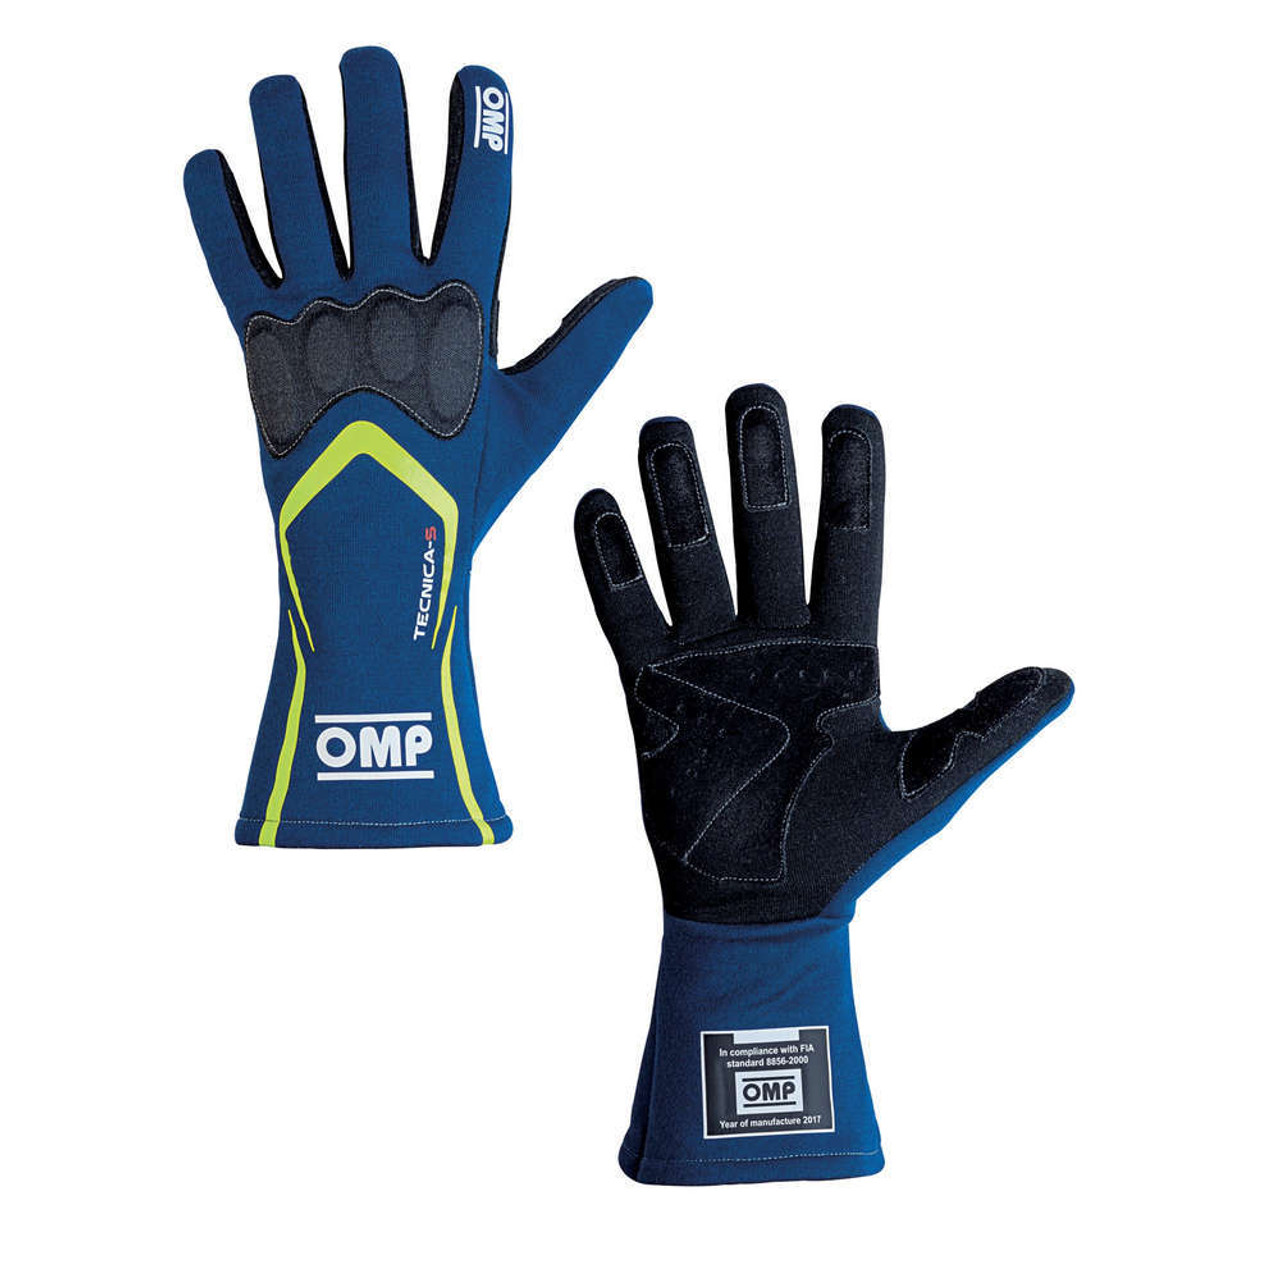 TECNICA-S Gloves Blue Yellow Md OMPIB764BGIM